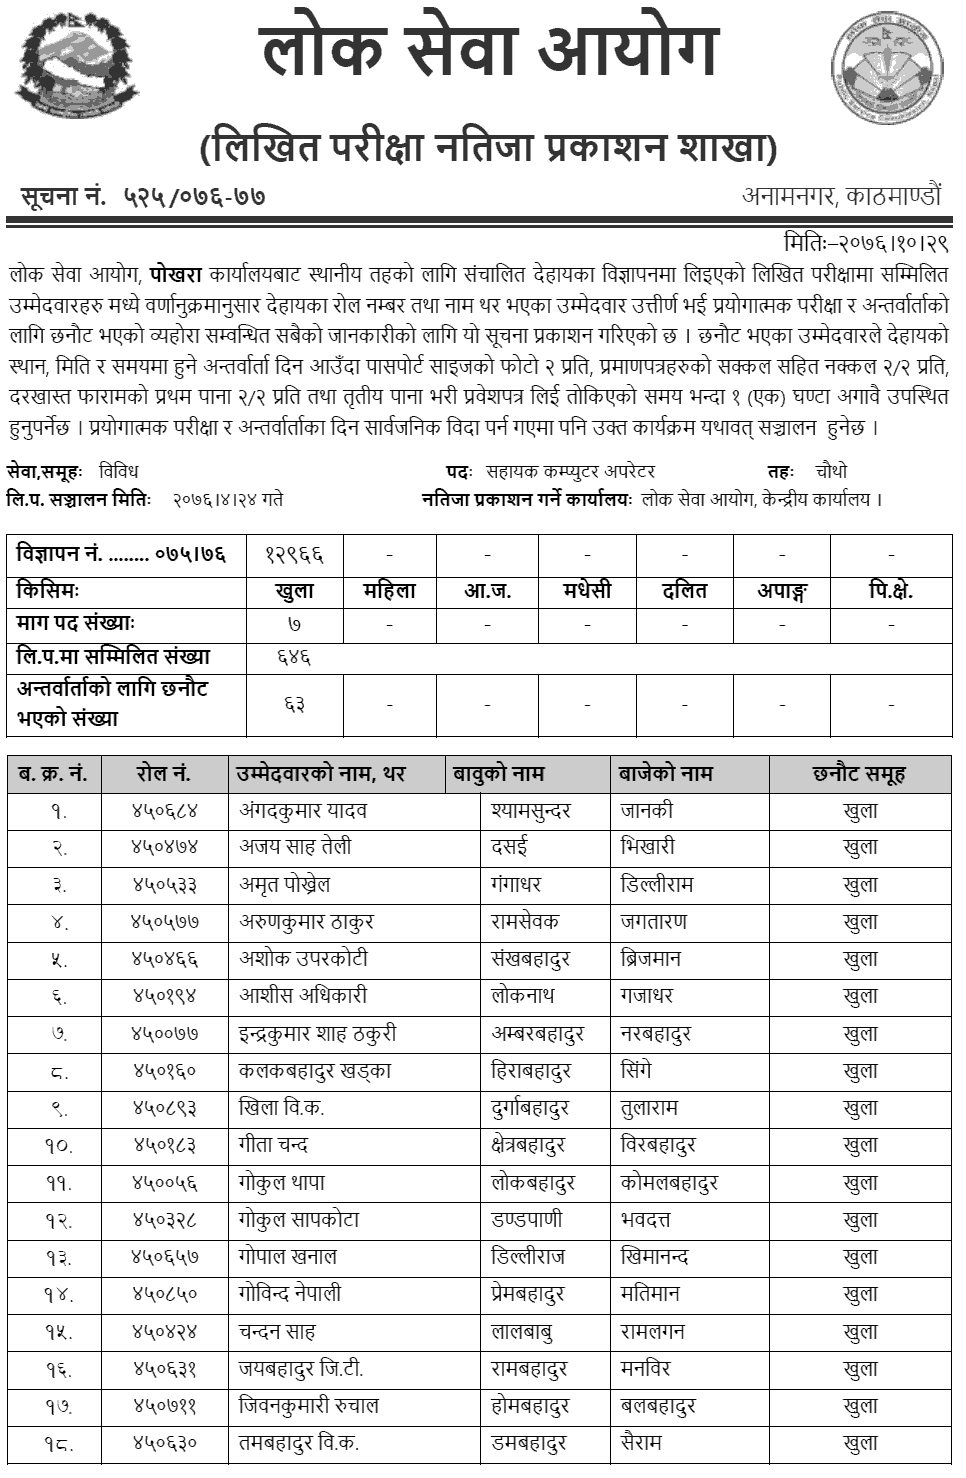 Lok Sewa Aayog Pokhara Local Level 4th Assistant Computer Operator Written Exam Result